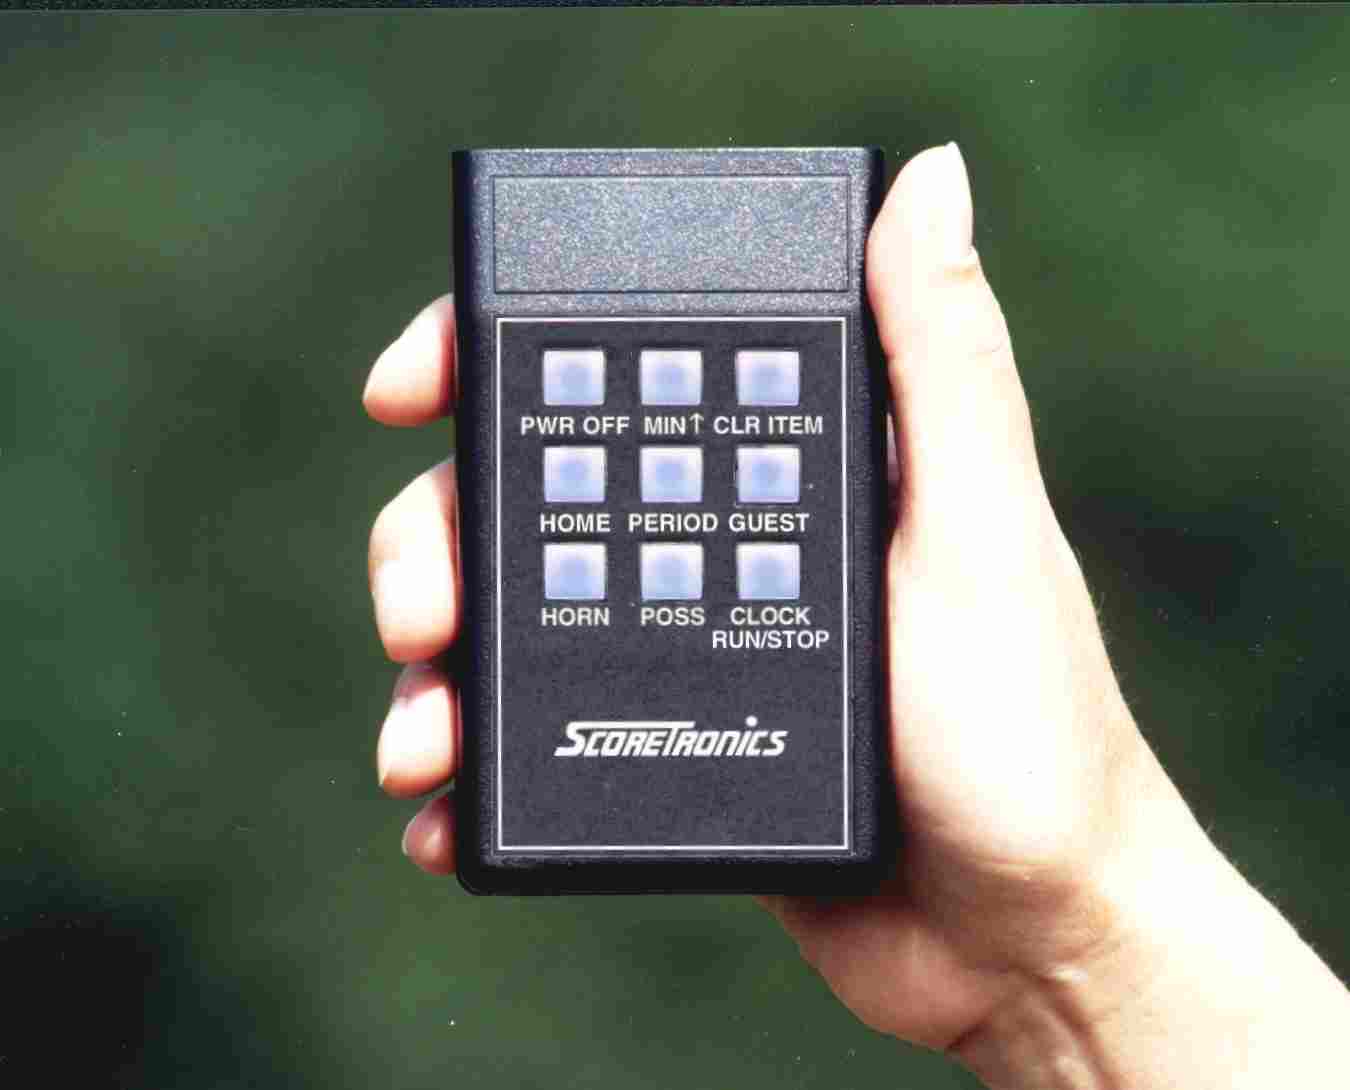 Standard remote control for portable basktball / football / soccer / hockey scoreboard.